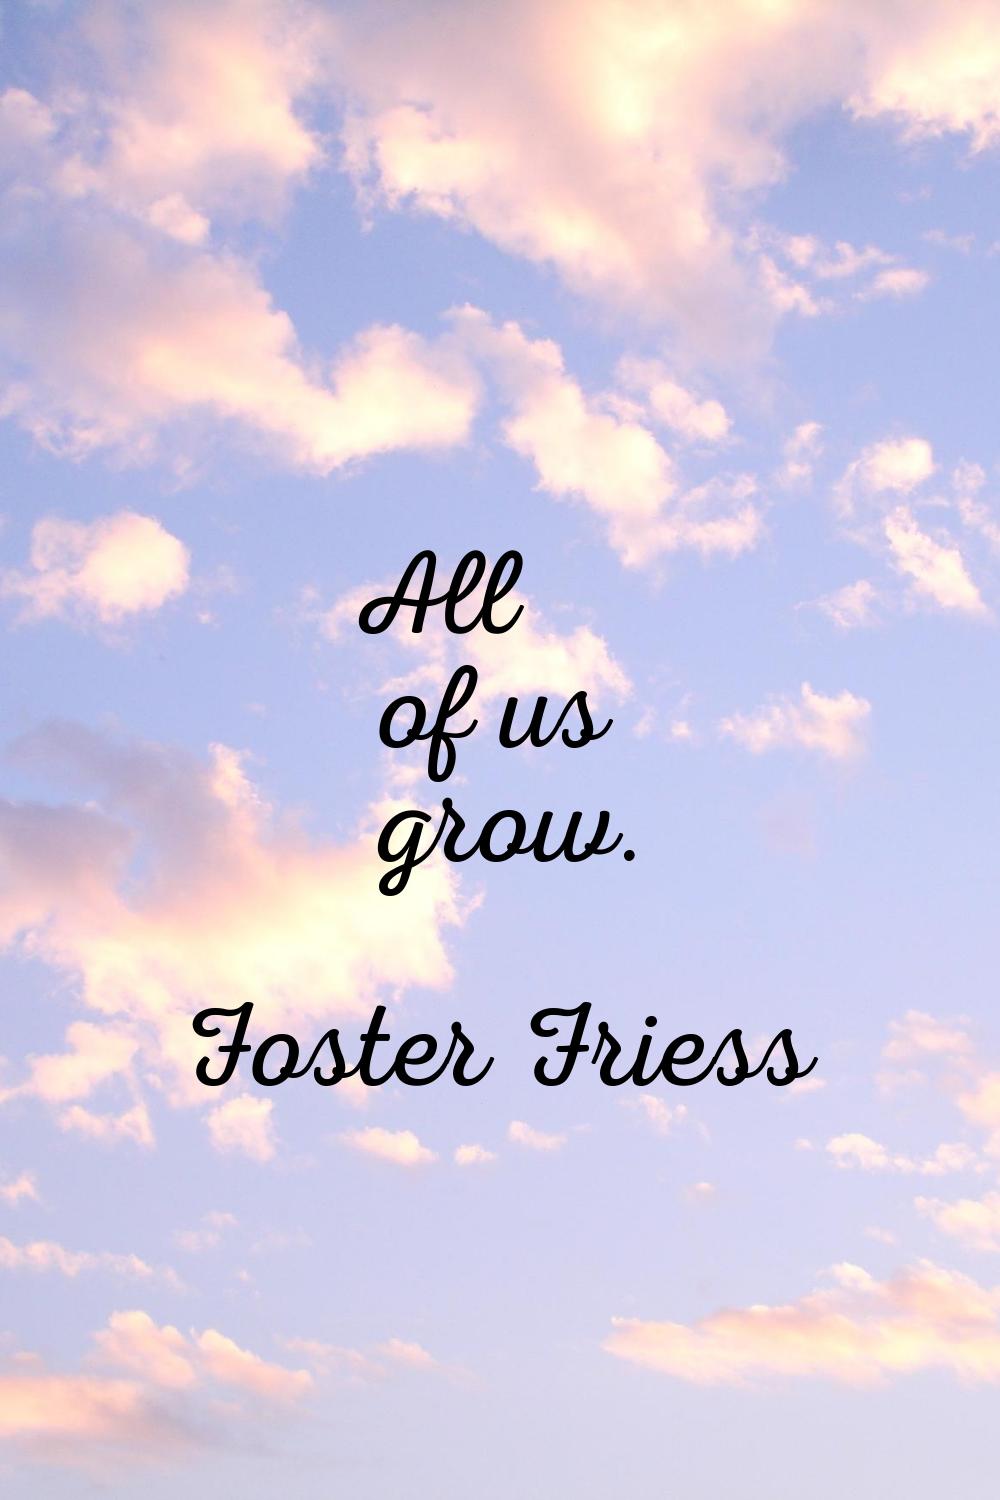 All of us grow.